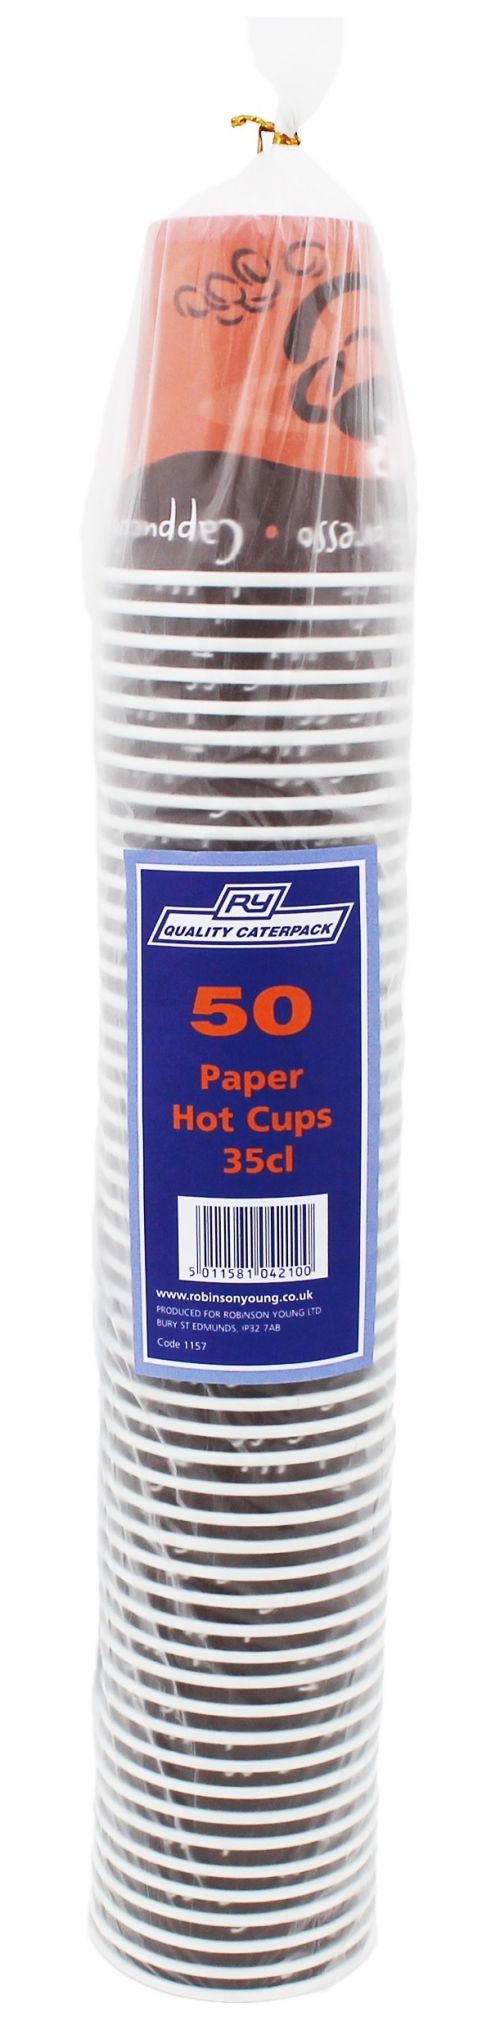 Caterpack Paper Hot Cups 12oz (35cl) PK50